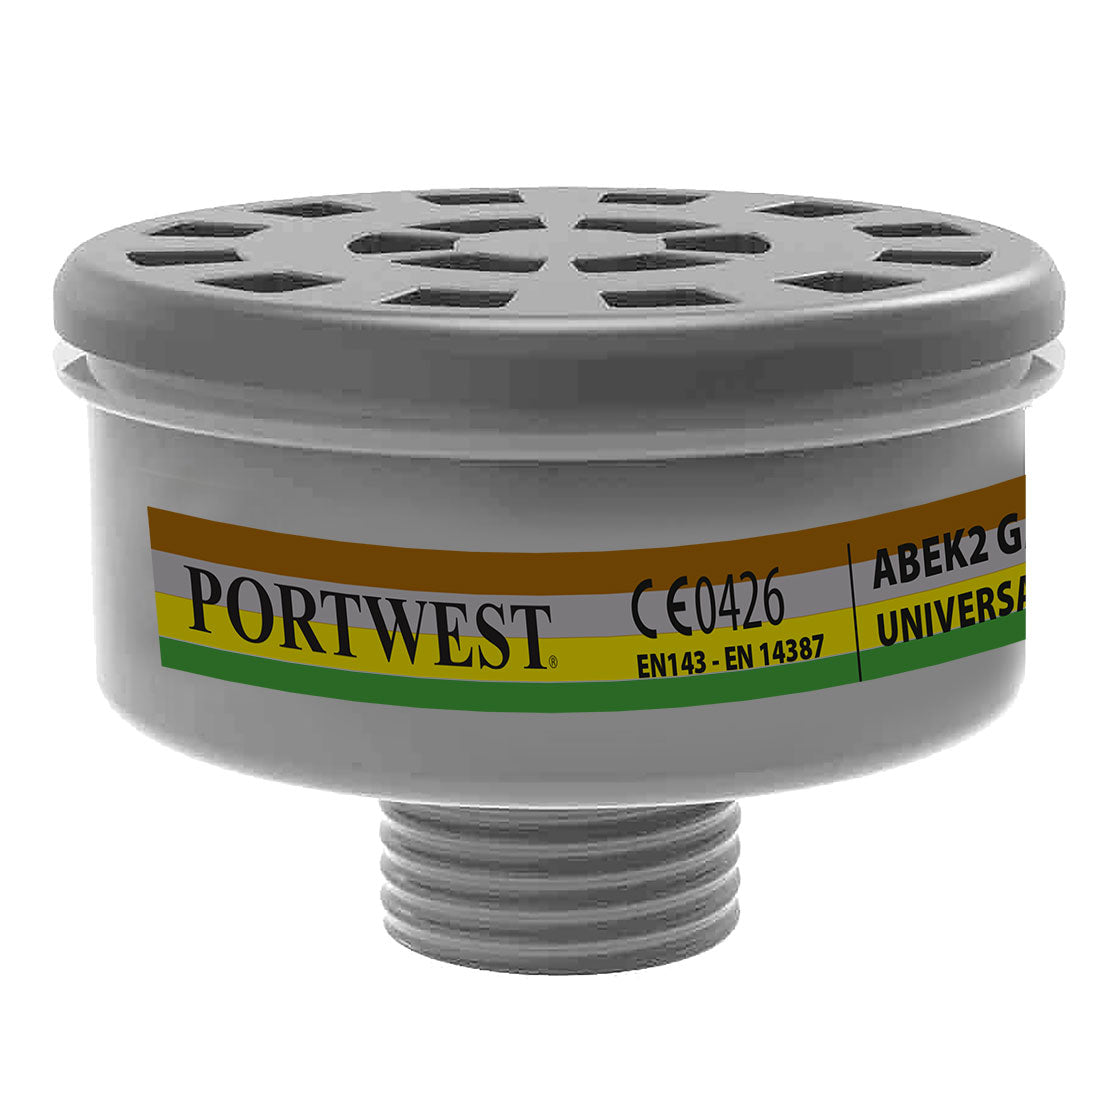 Portwest Filter Uni Tread (Pack of 4)